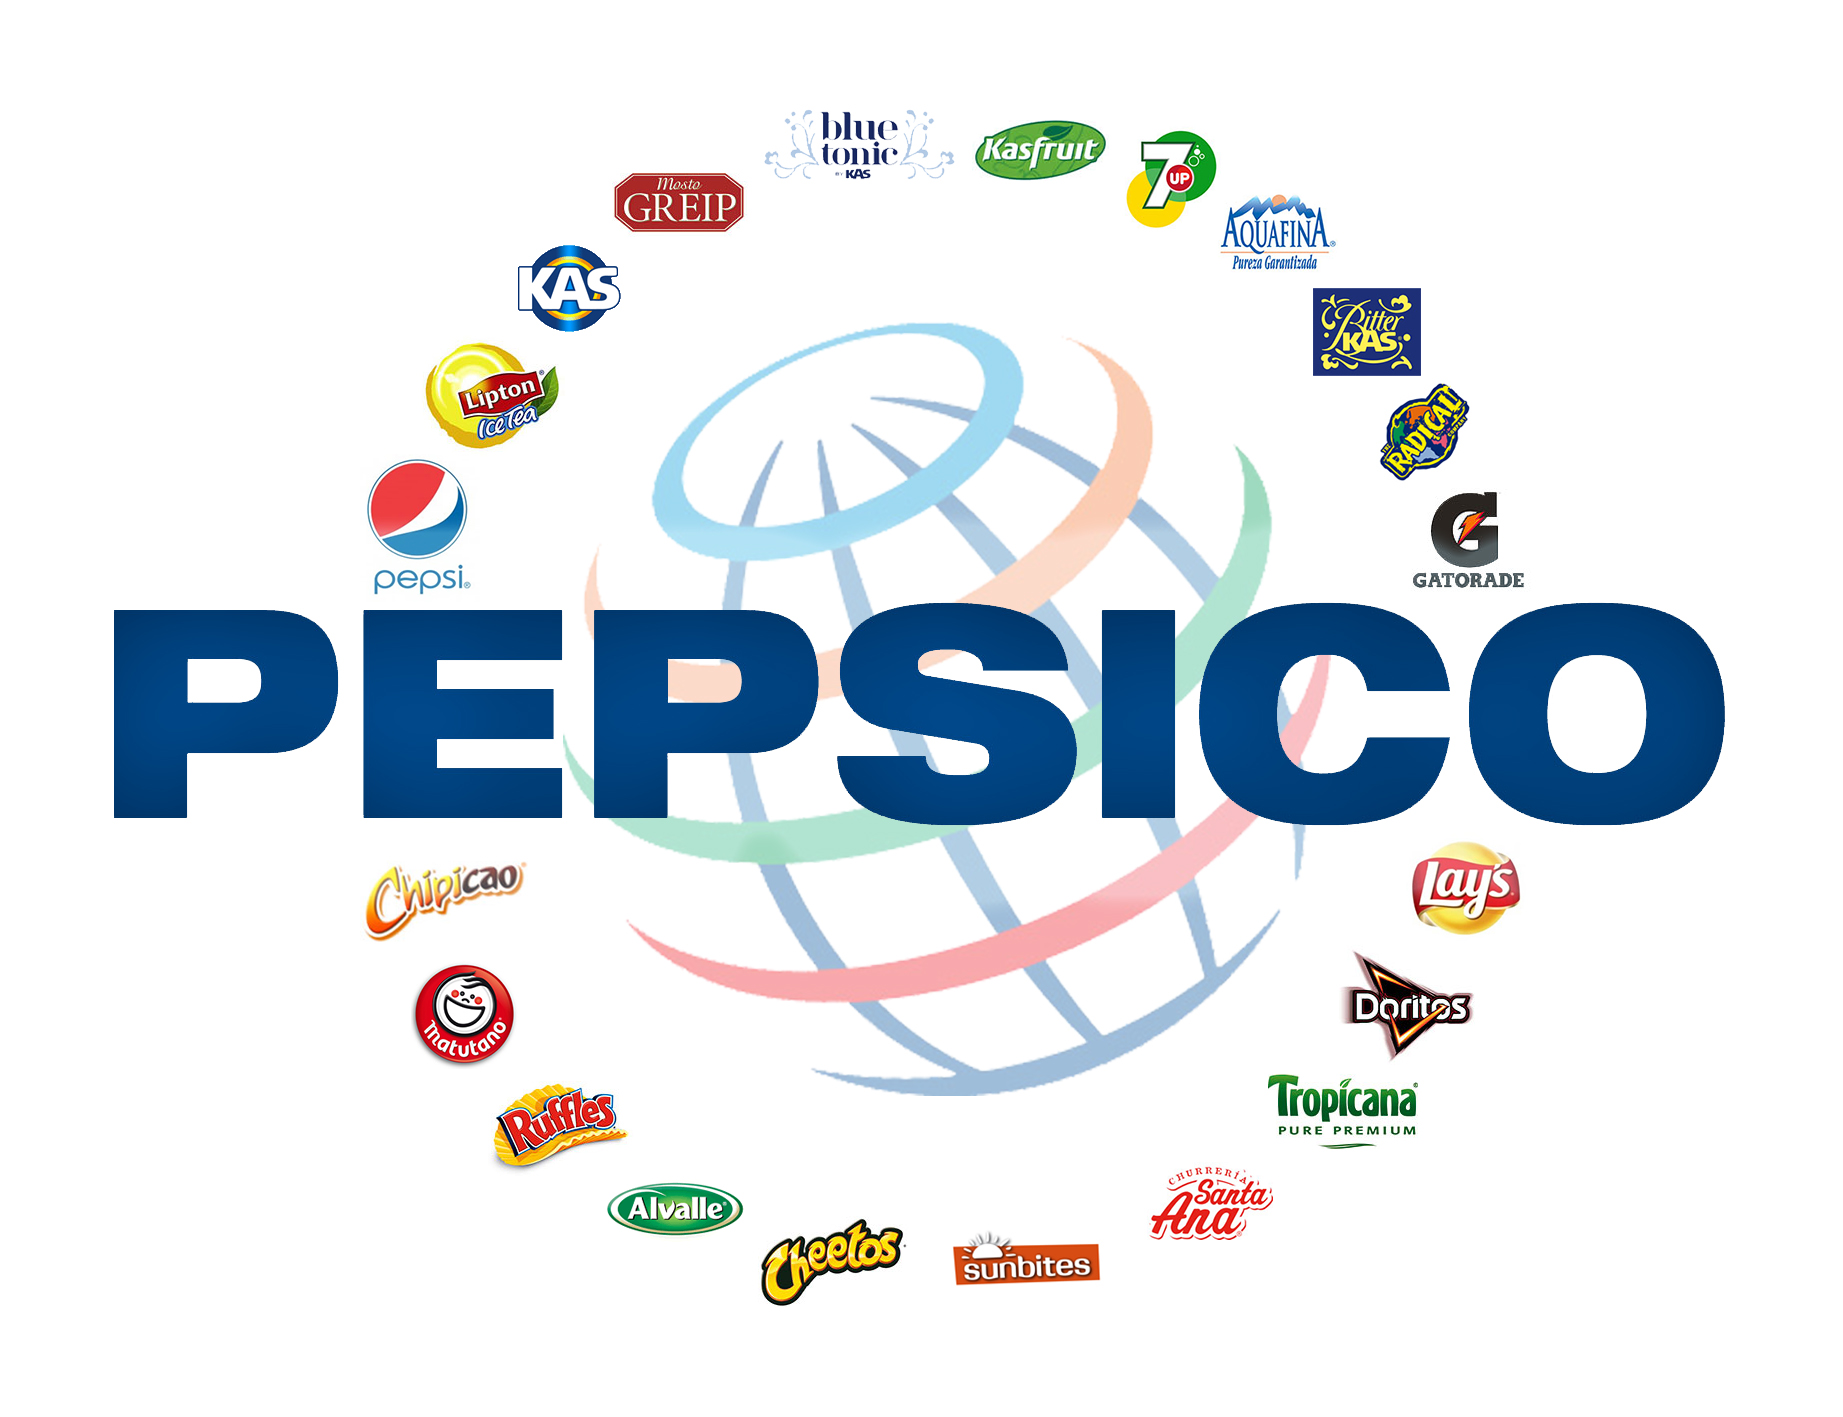 PepsiCo Presentation 9/15/16 – SJU AMA